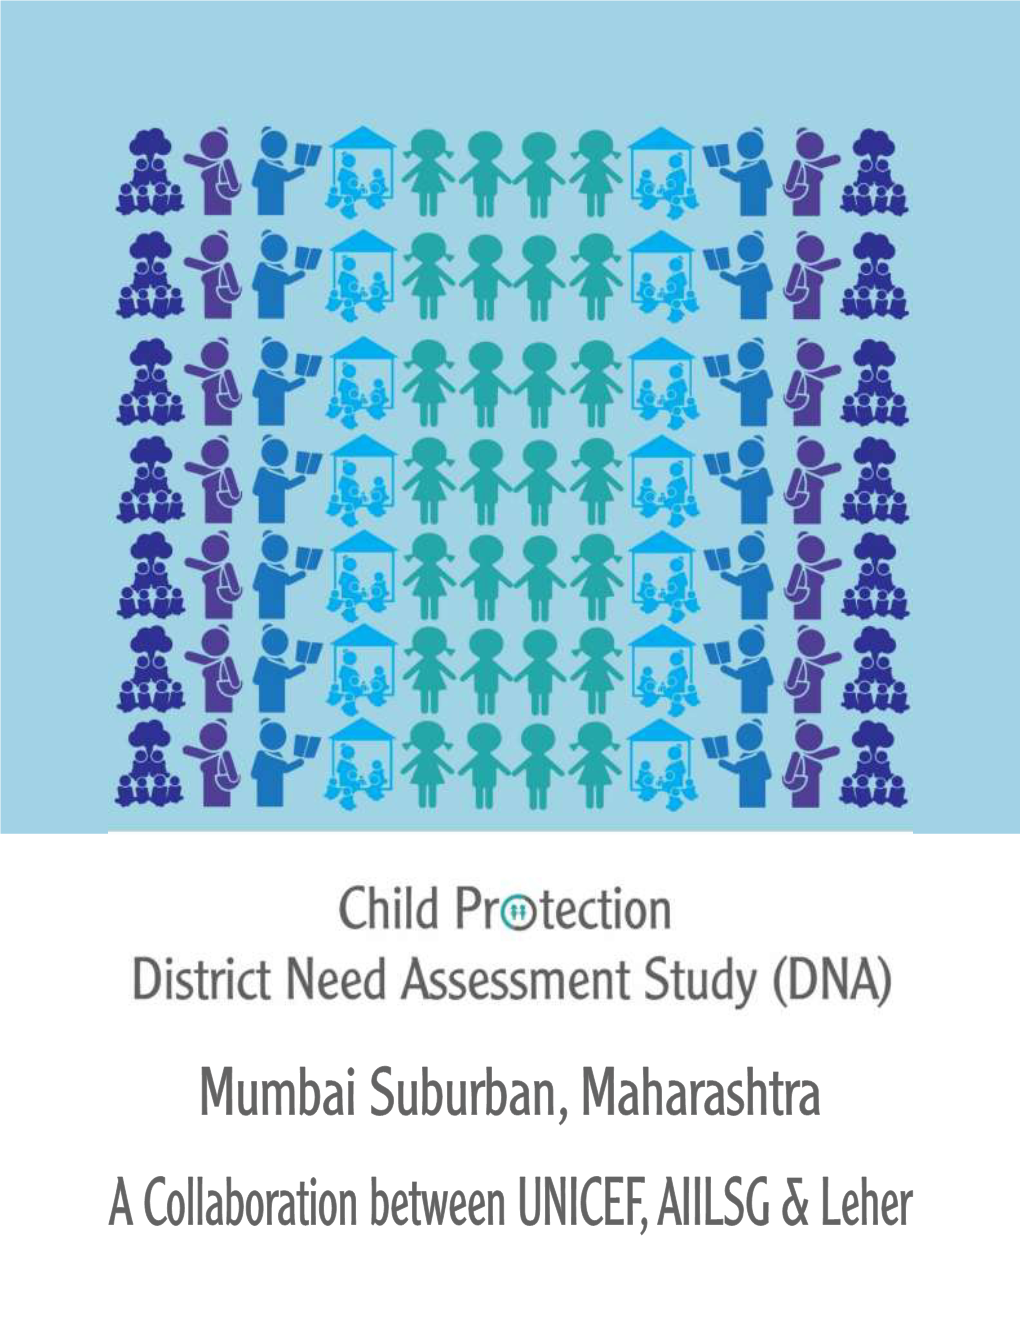 District Need Assessment Study (DNA) for Mumbai Suburban